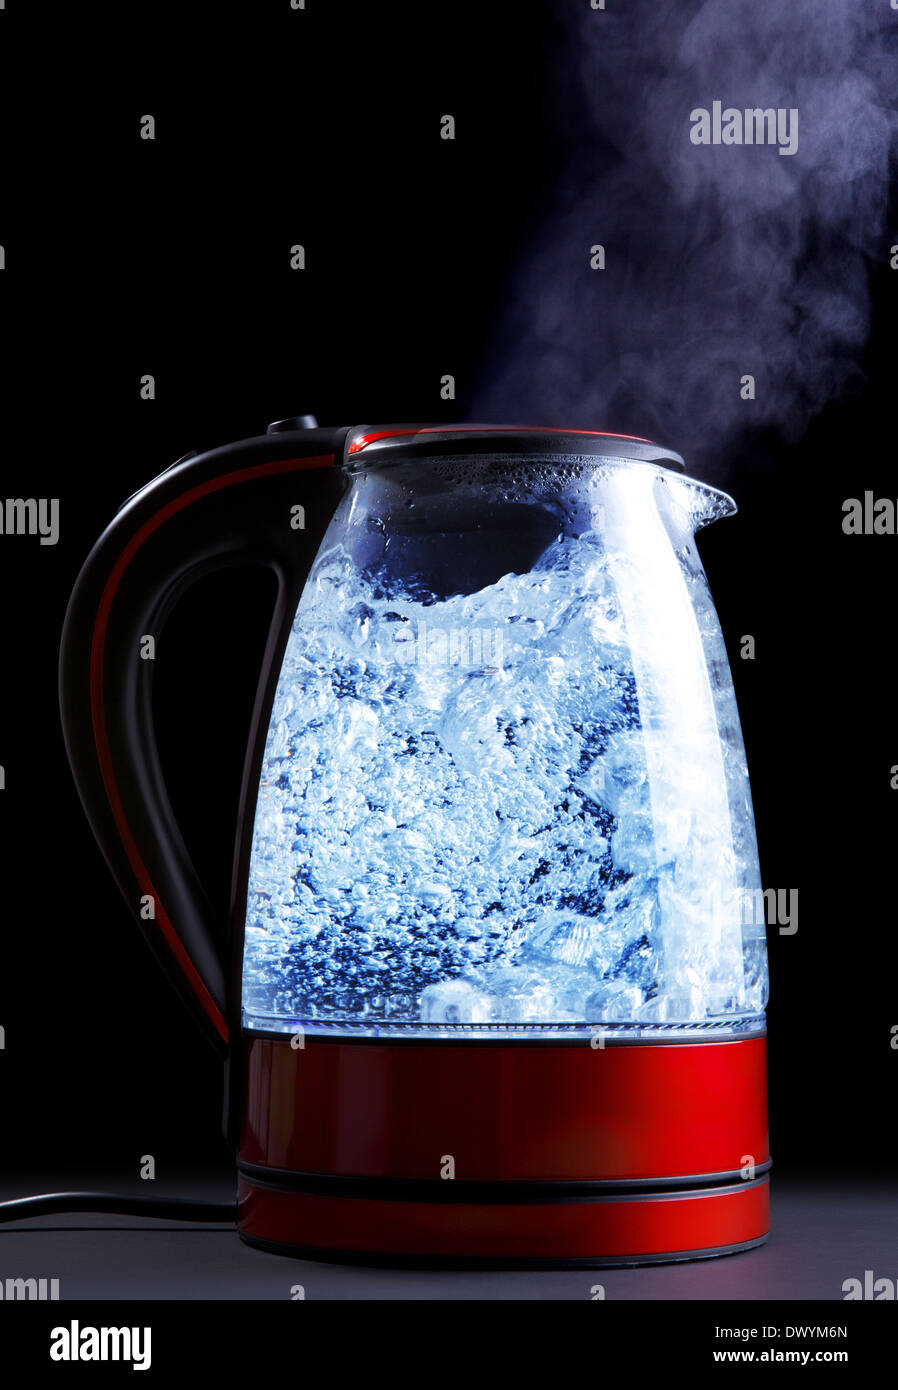 https://c8.alamy.com/comp/DWYM6N/glass-electric-kettle-with-boiling-water-black-background-DWYM6N.jpg